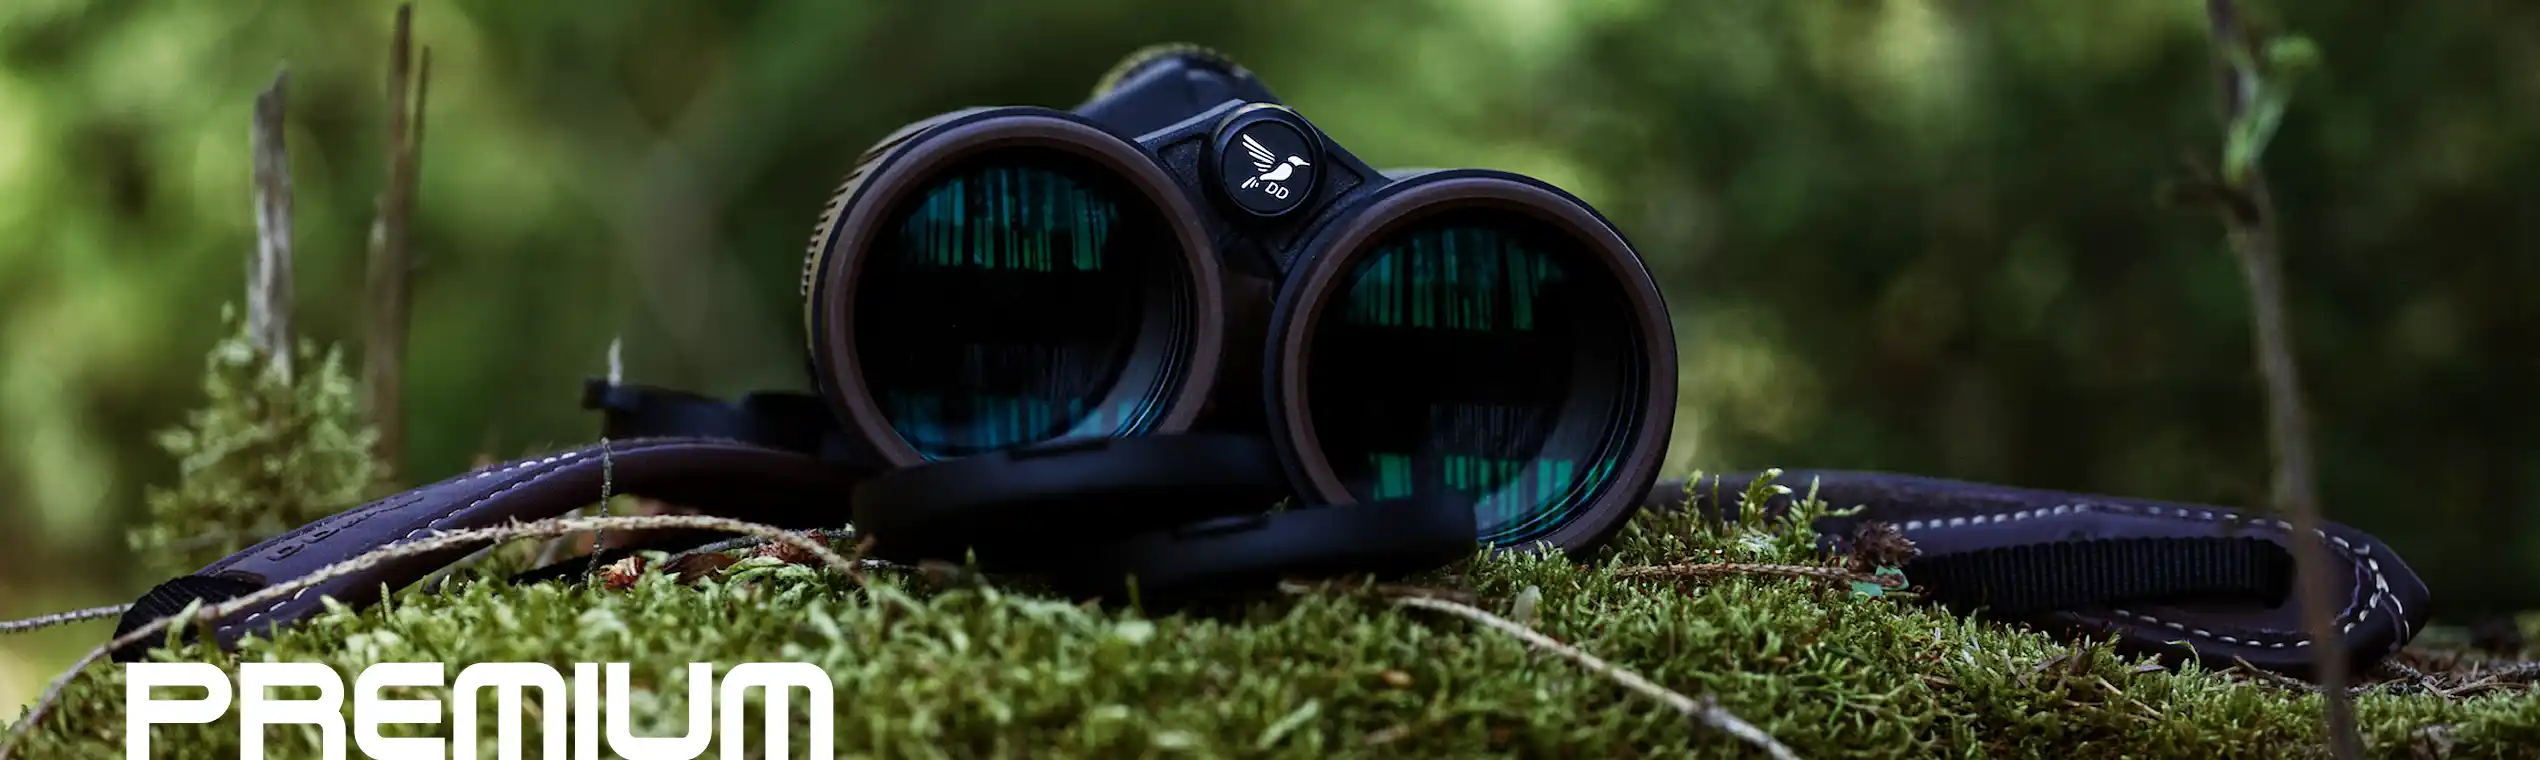 Premium binoculars